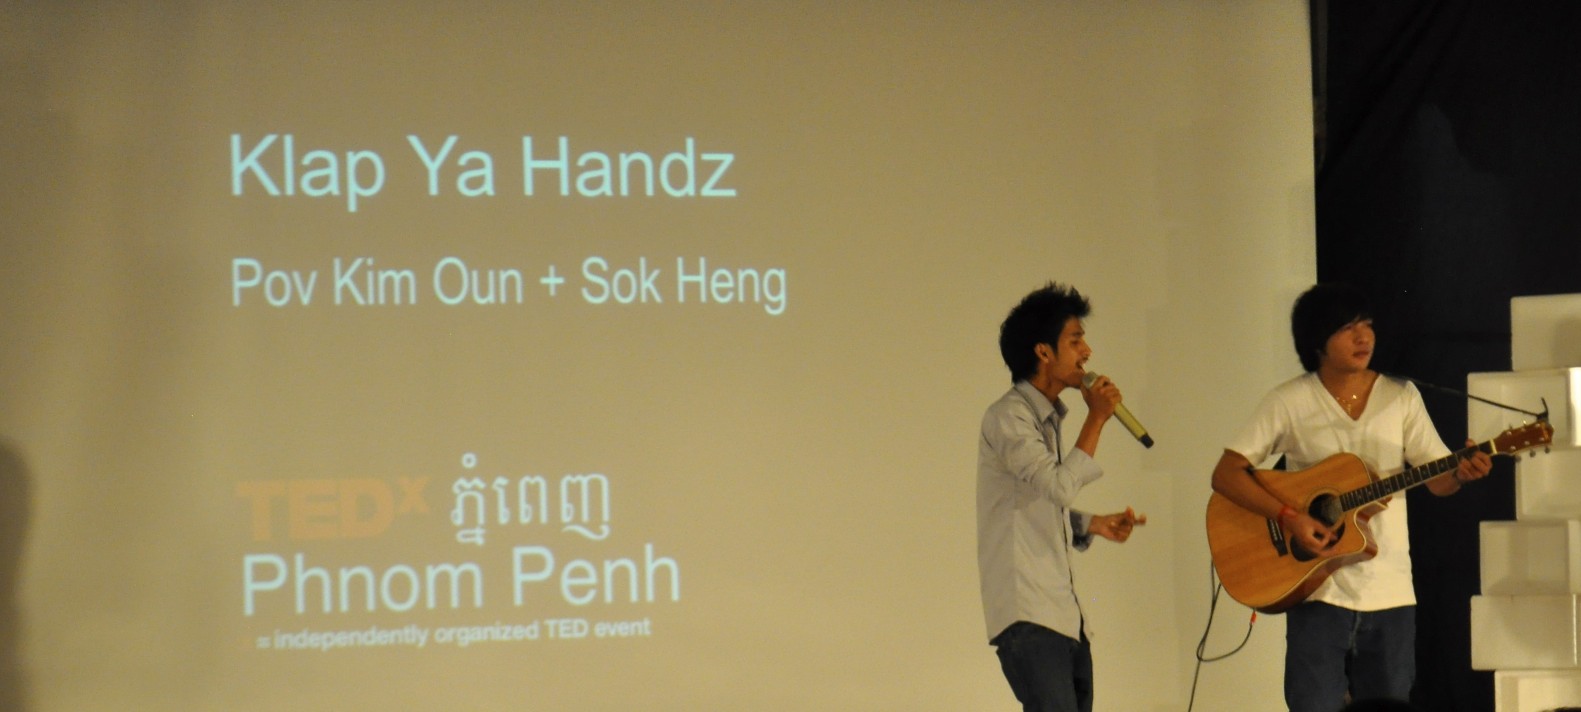 klap ya handz for TEDx in Phnom Penh, By: Gabrielle Yetter